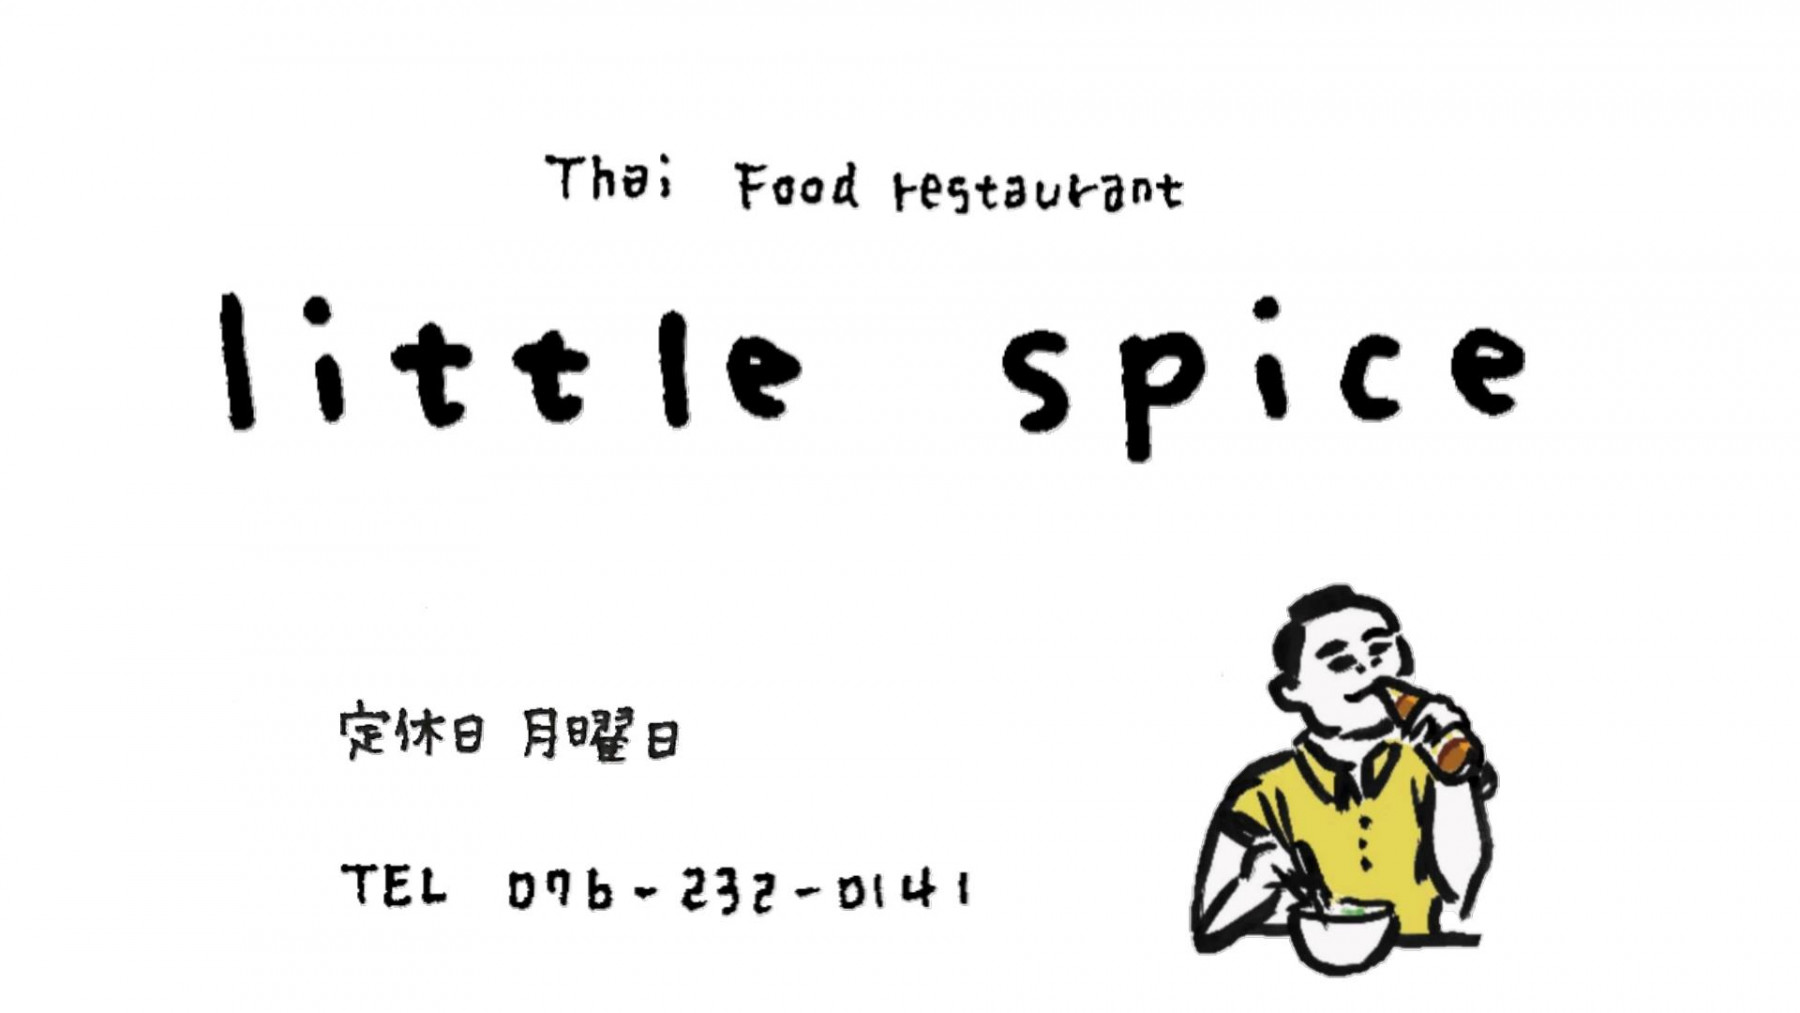 little spice

